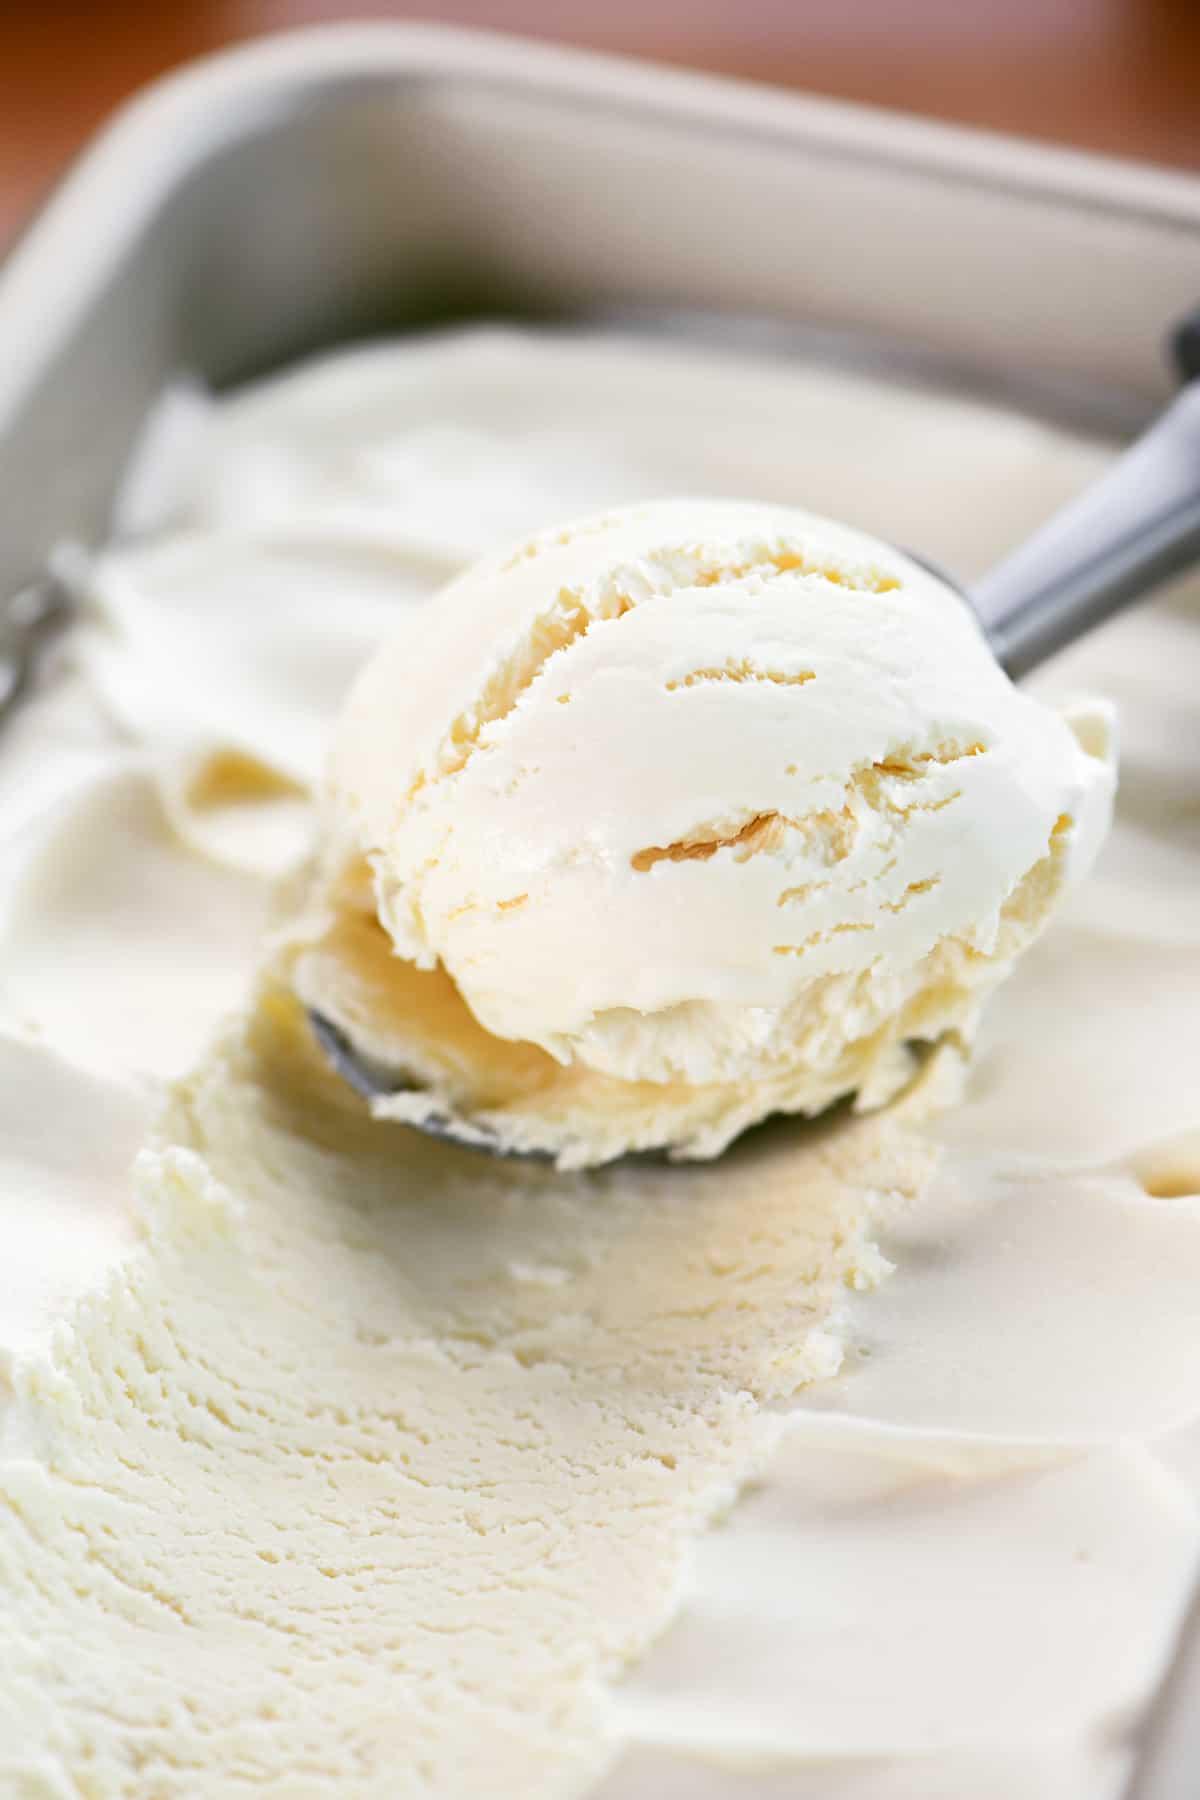 A scoop of 3 ingredient ice cream.